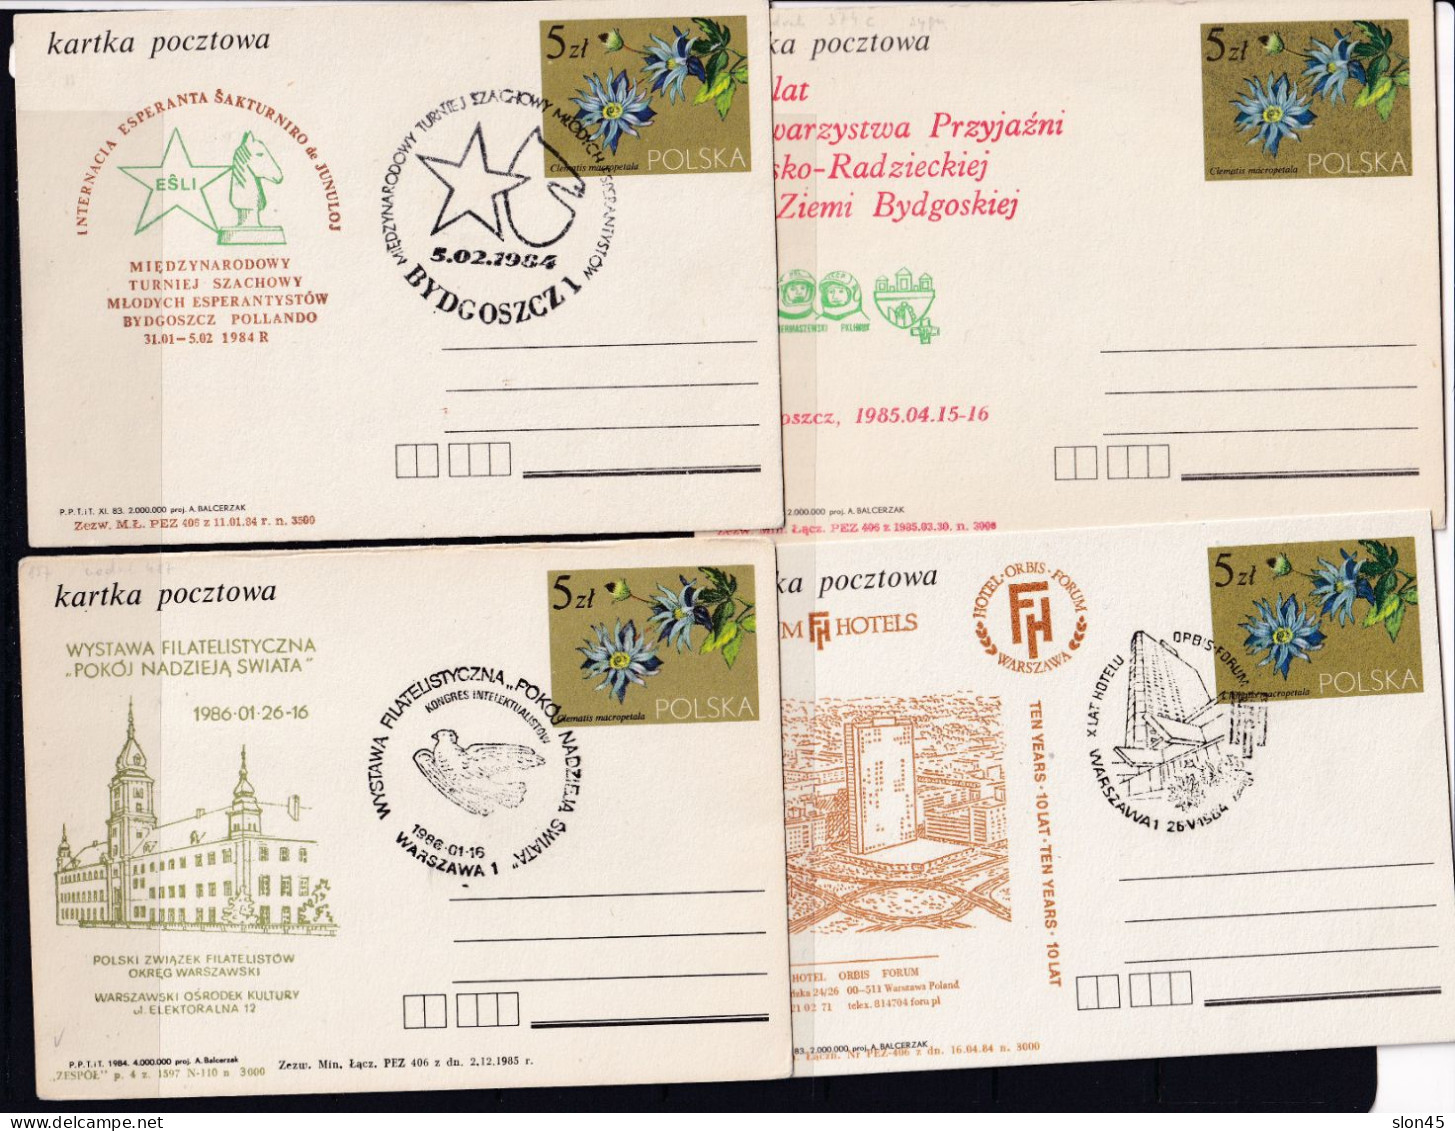 Poland 10 Postal Stationary Card 5zl Special Cancel 16122 - Polen